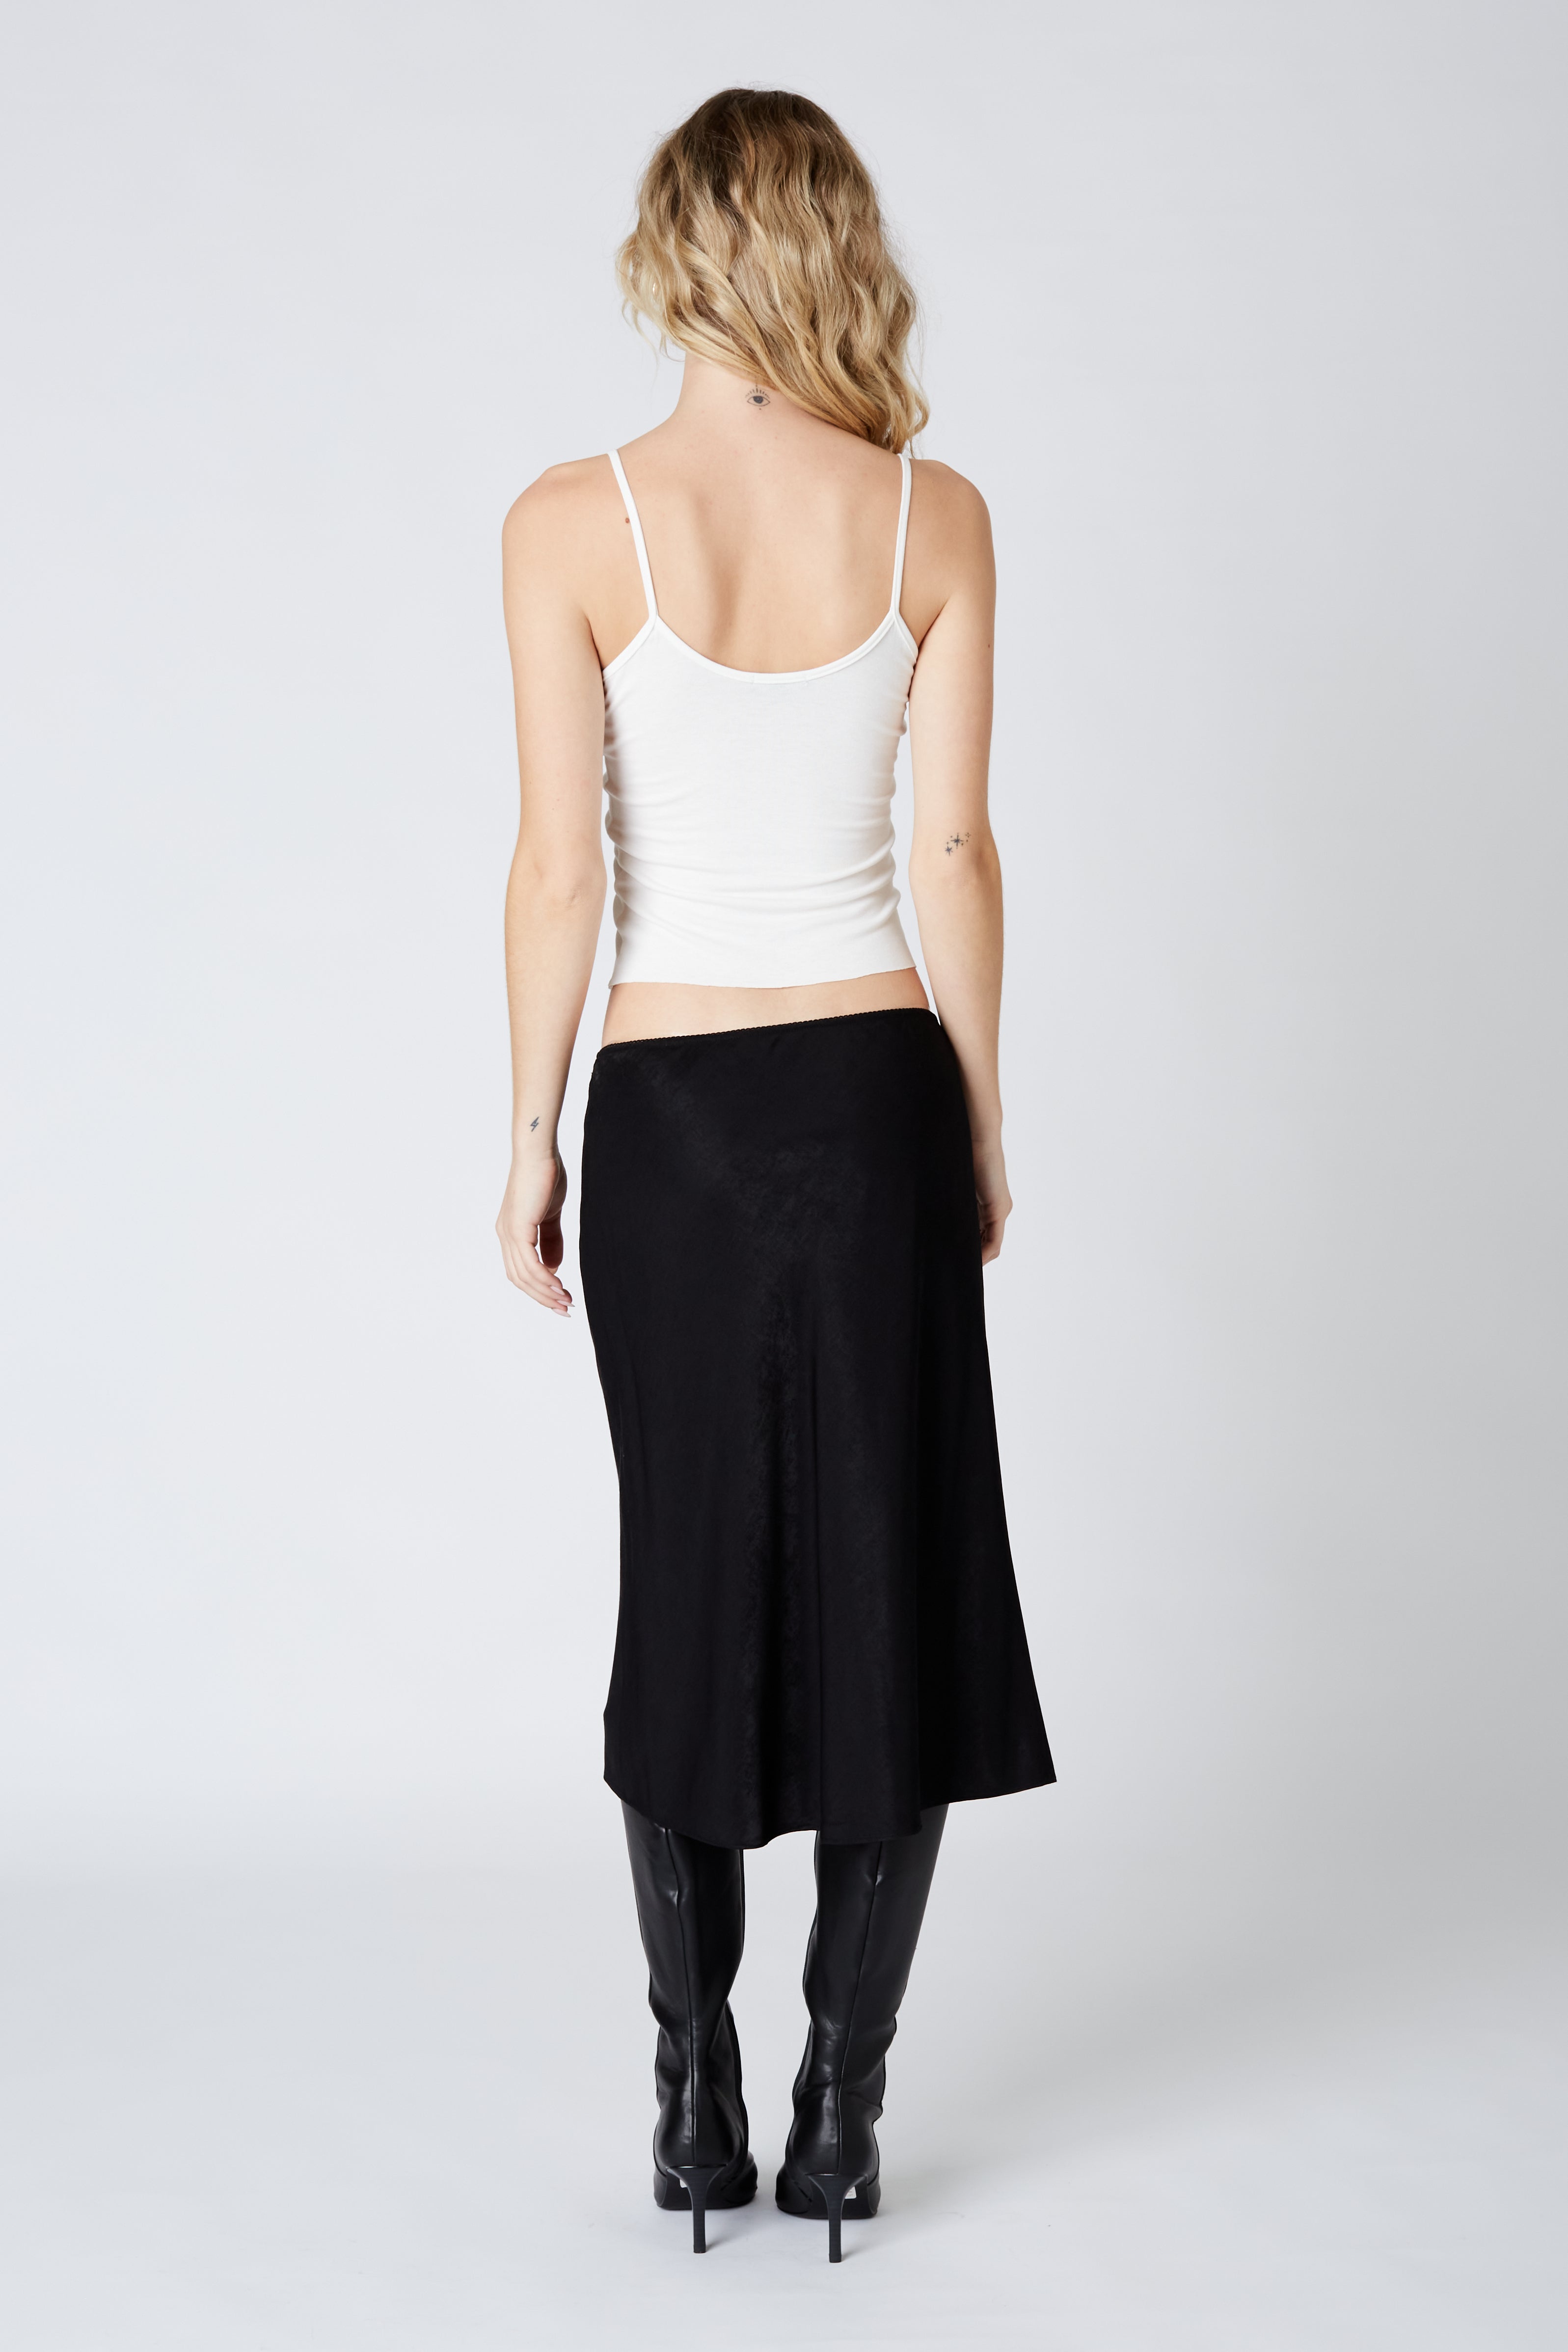 Knee Length Bias Skirt in black back view